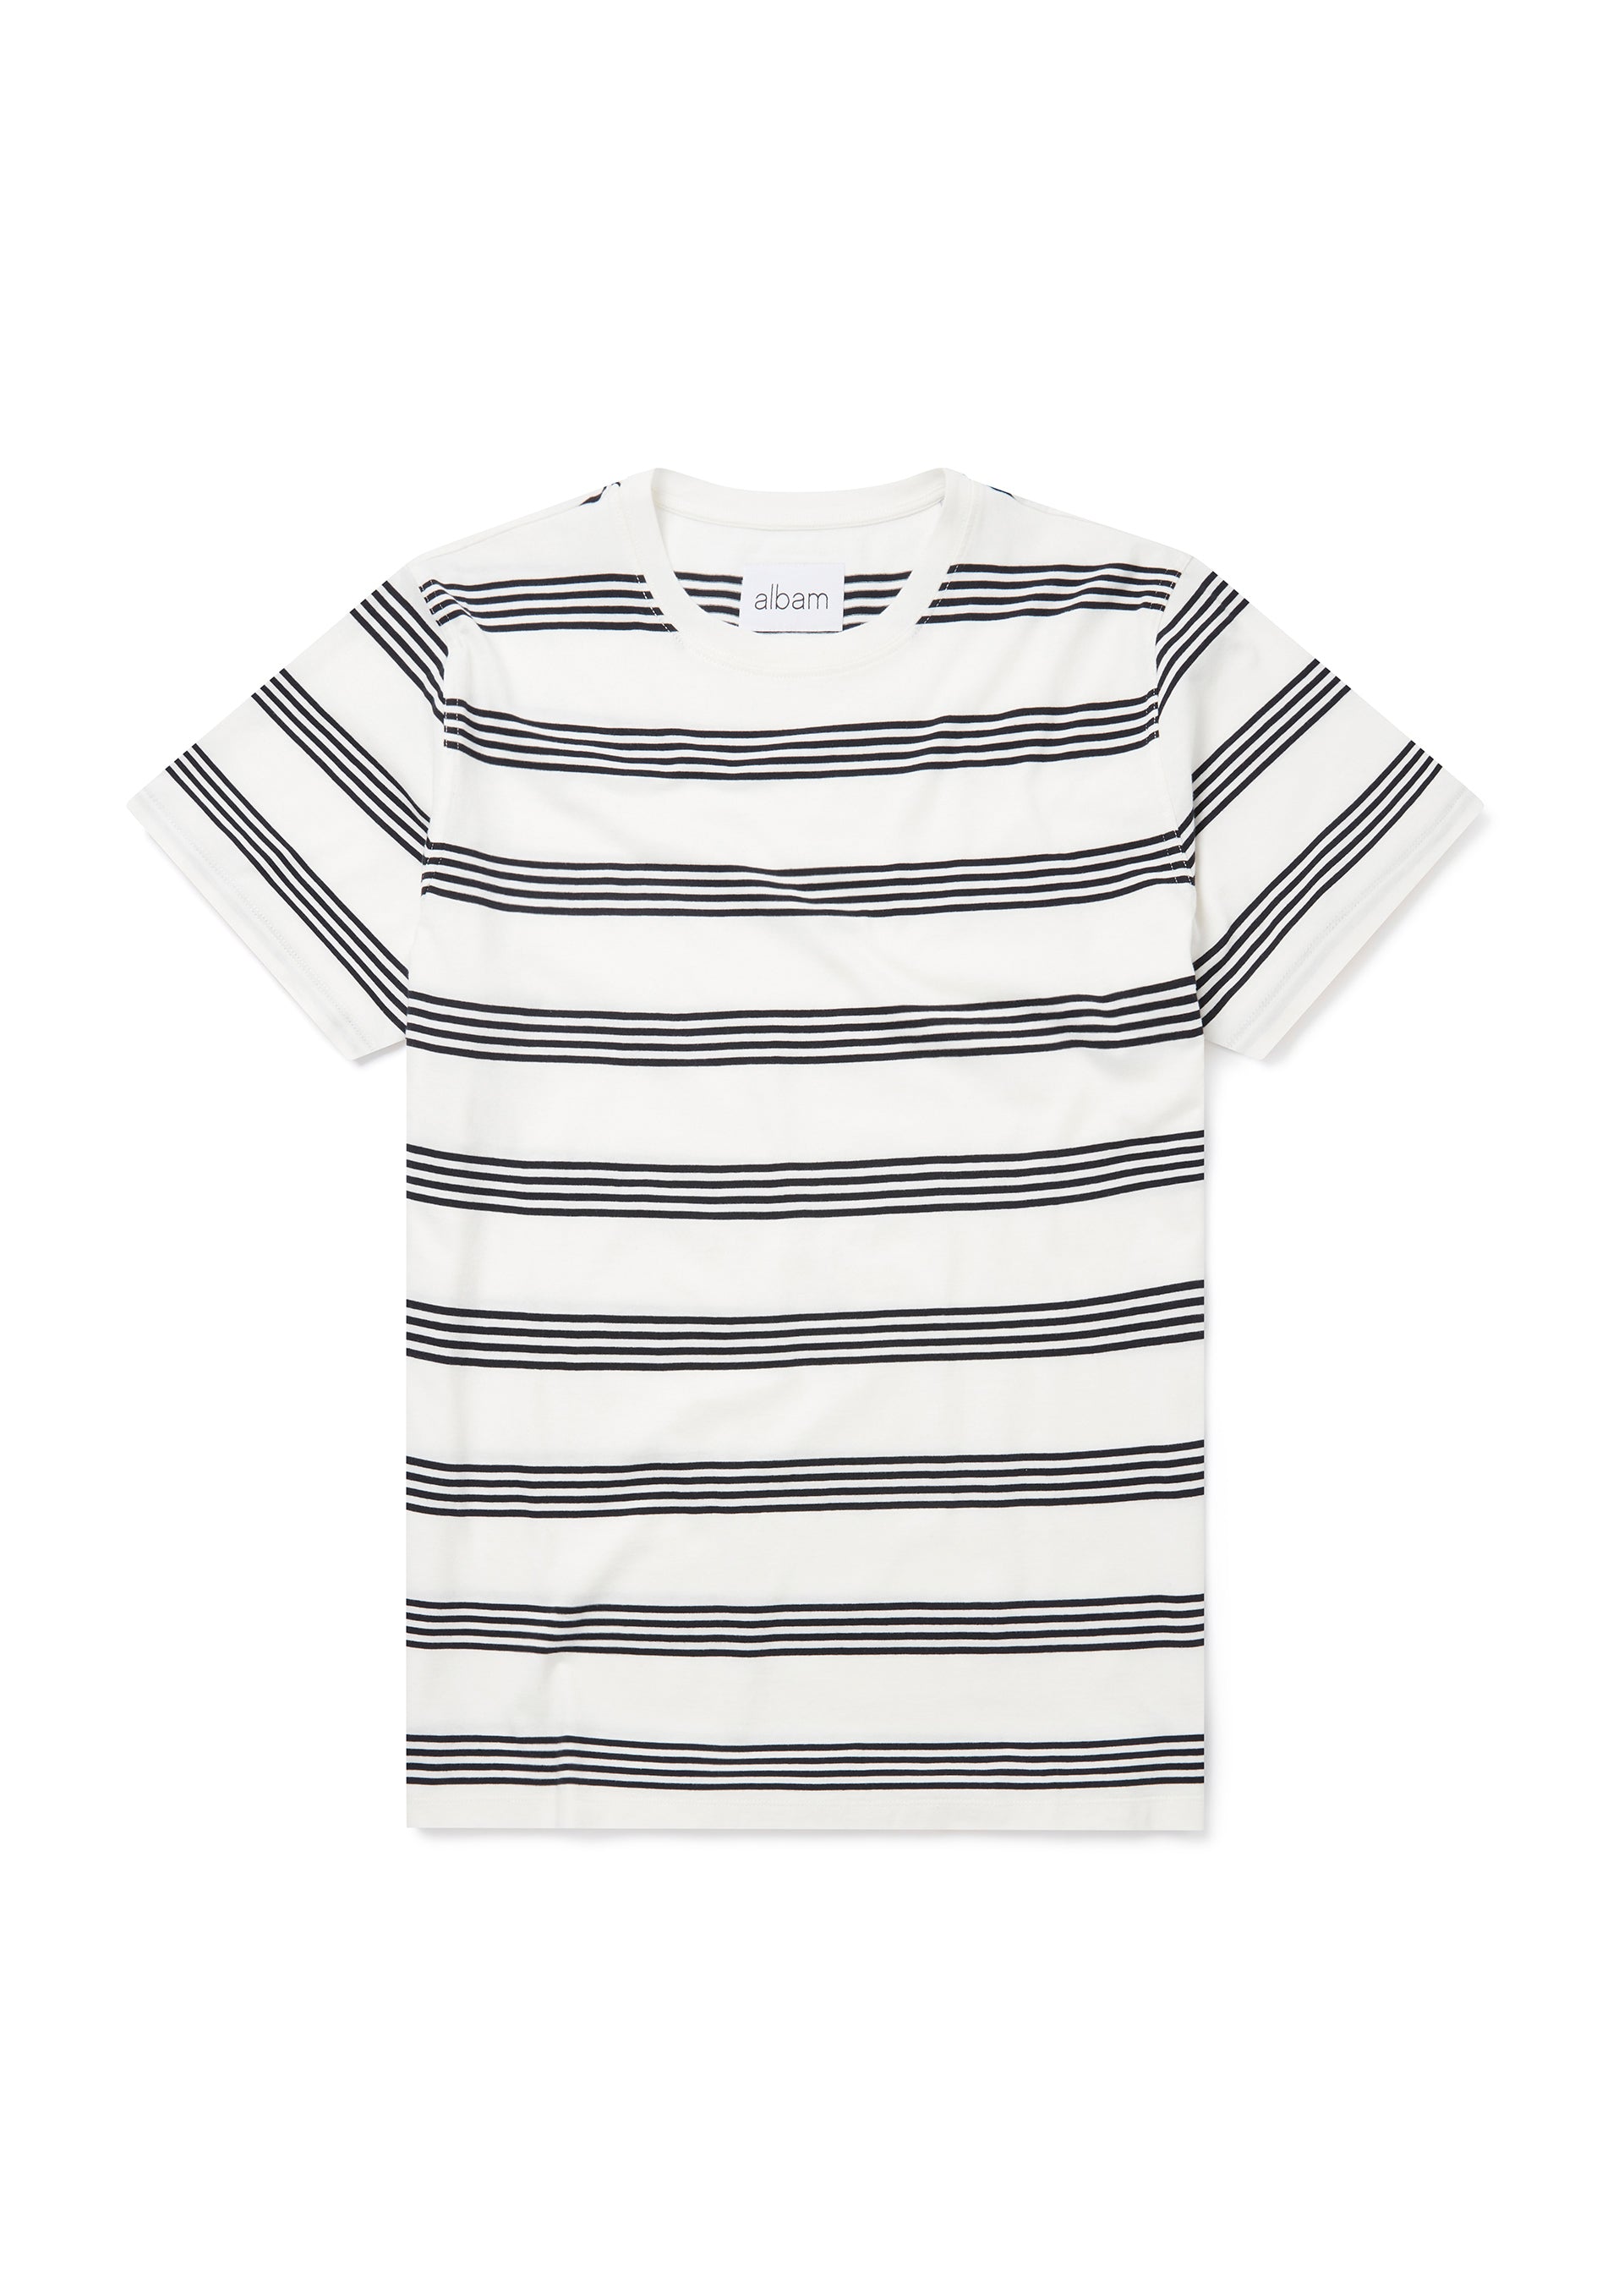 Fine Stripe T-Shirt in Off-White/Navy | albam Clothing